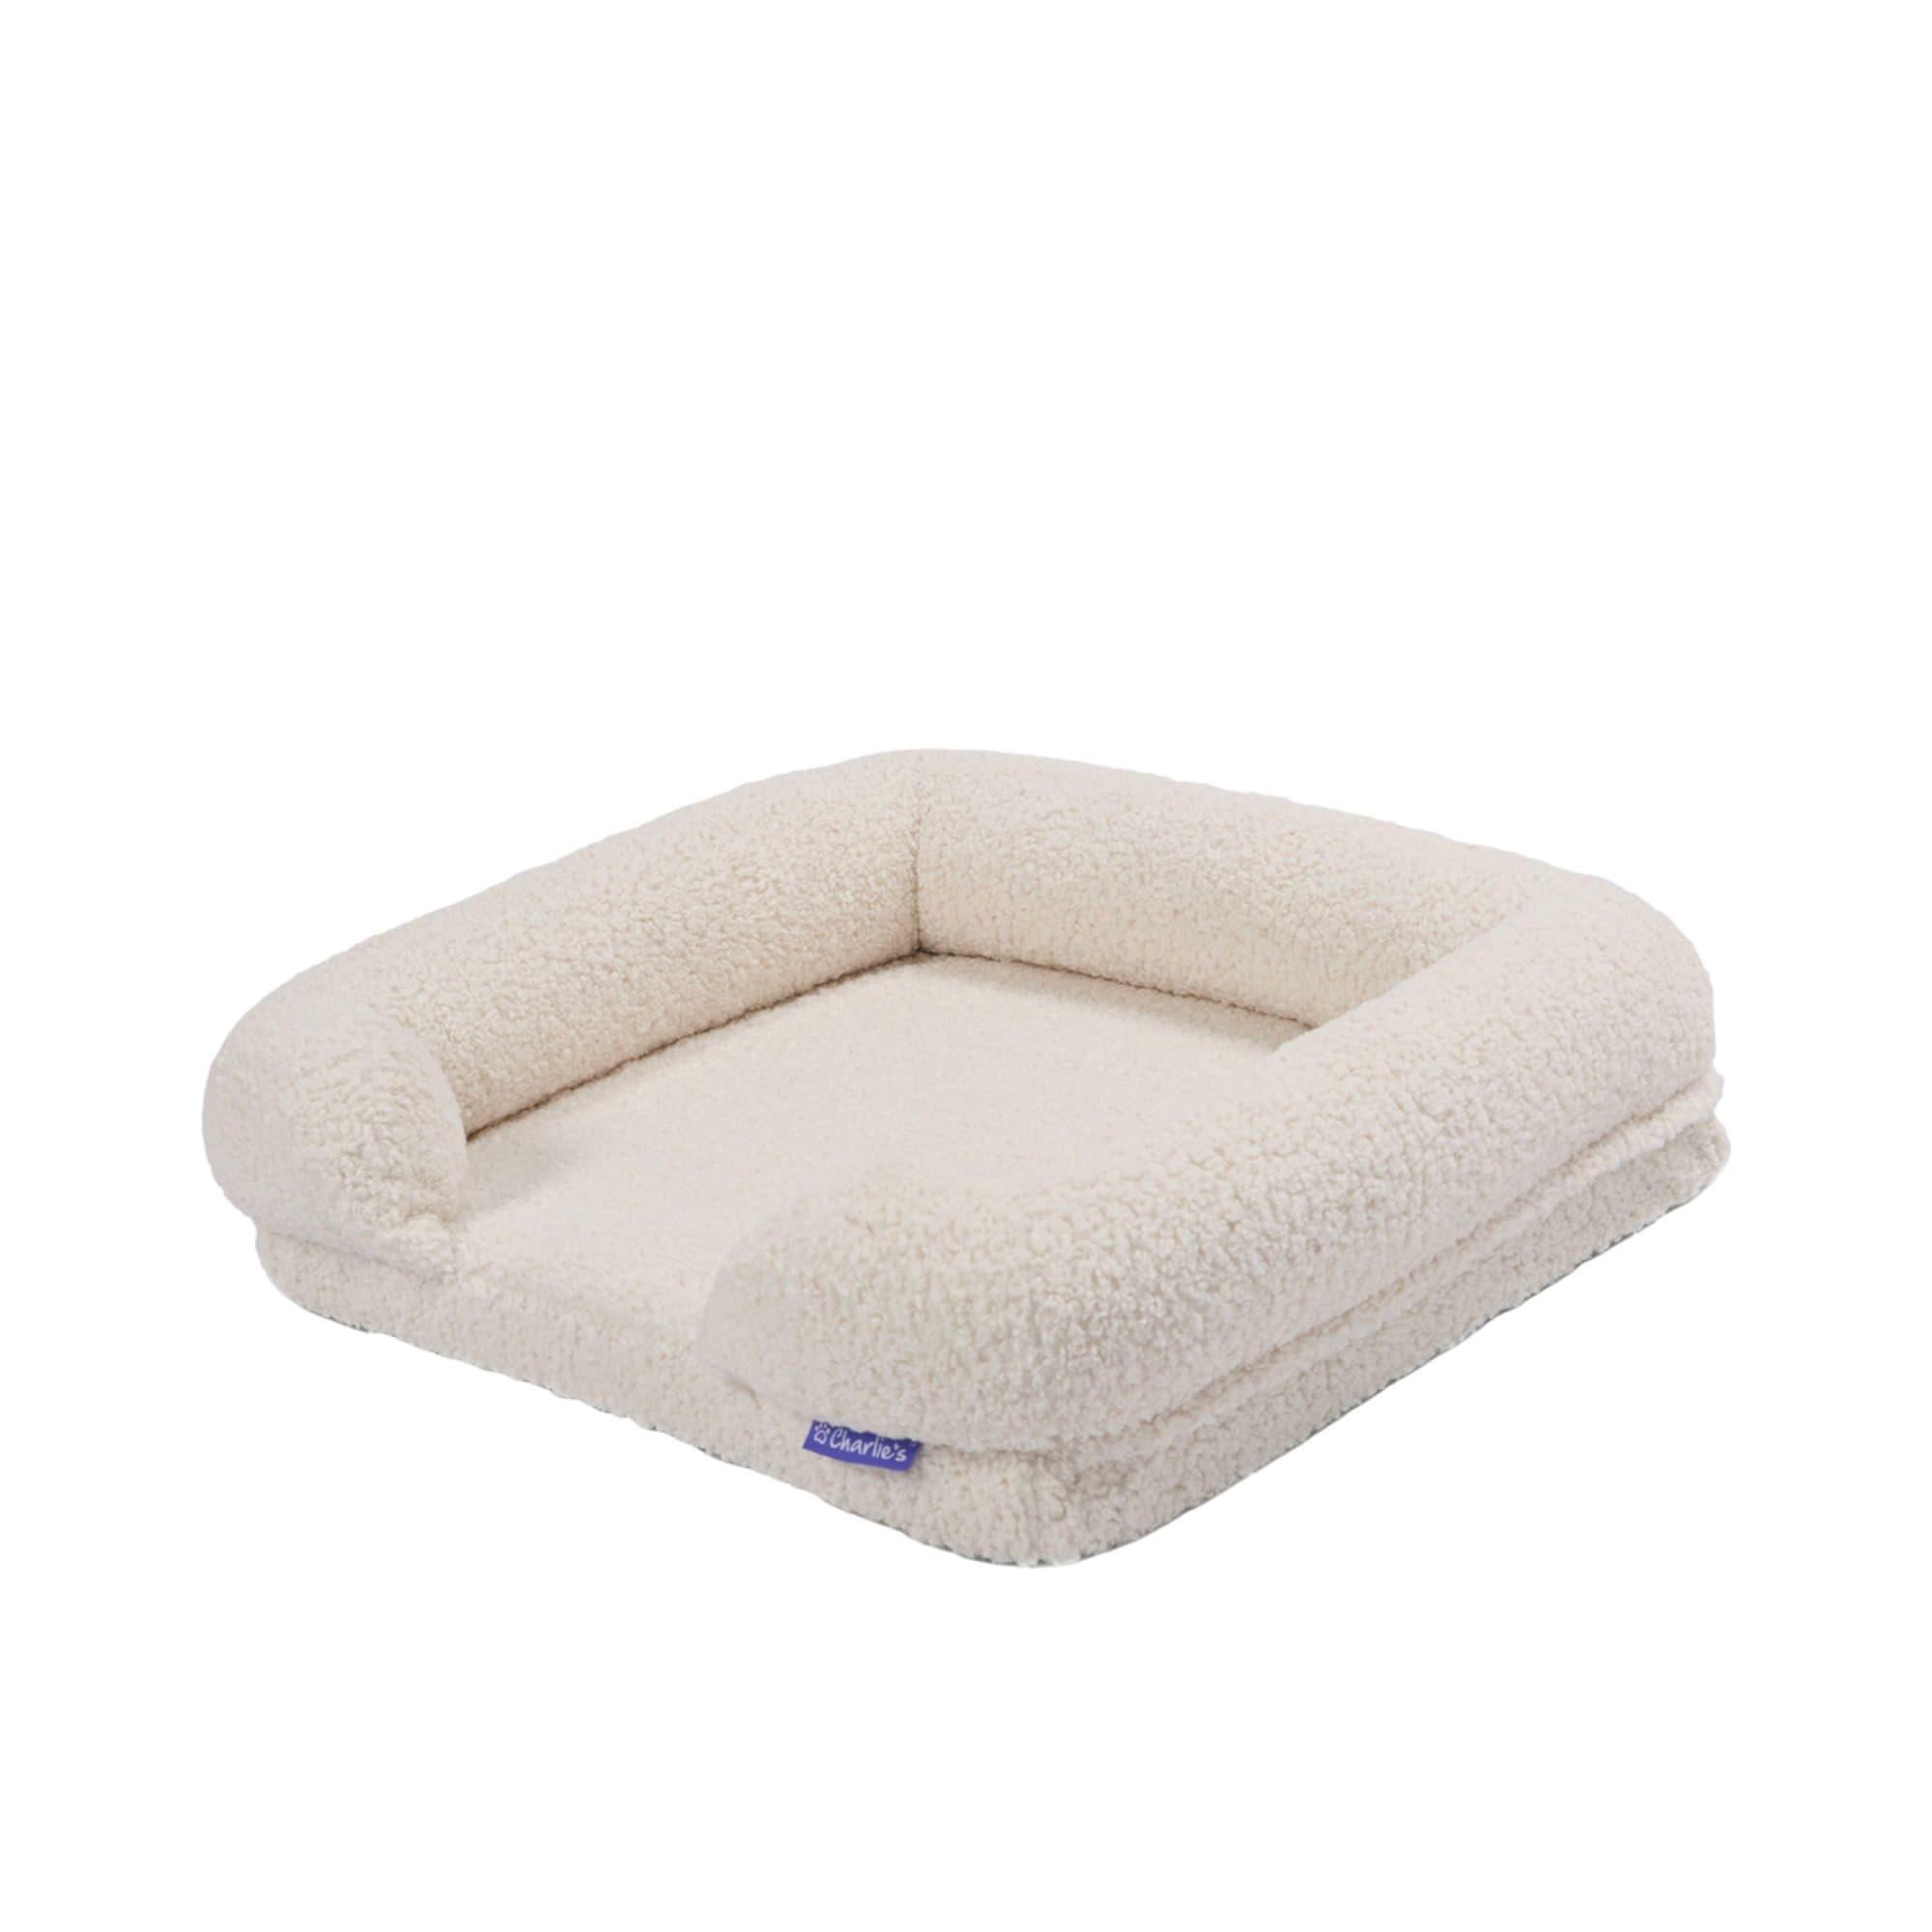 Charlie's Teddy Fleece Orthopedic Memory Foam Sofa Dog Bed Small Cream Image 3